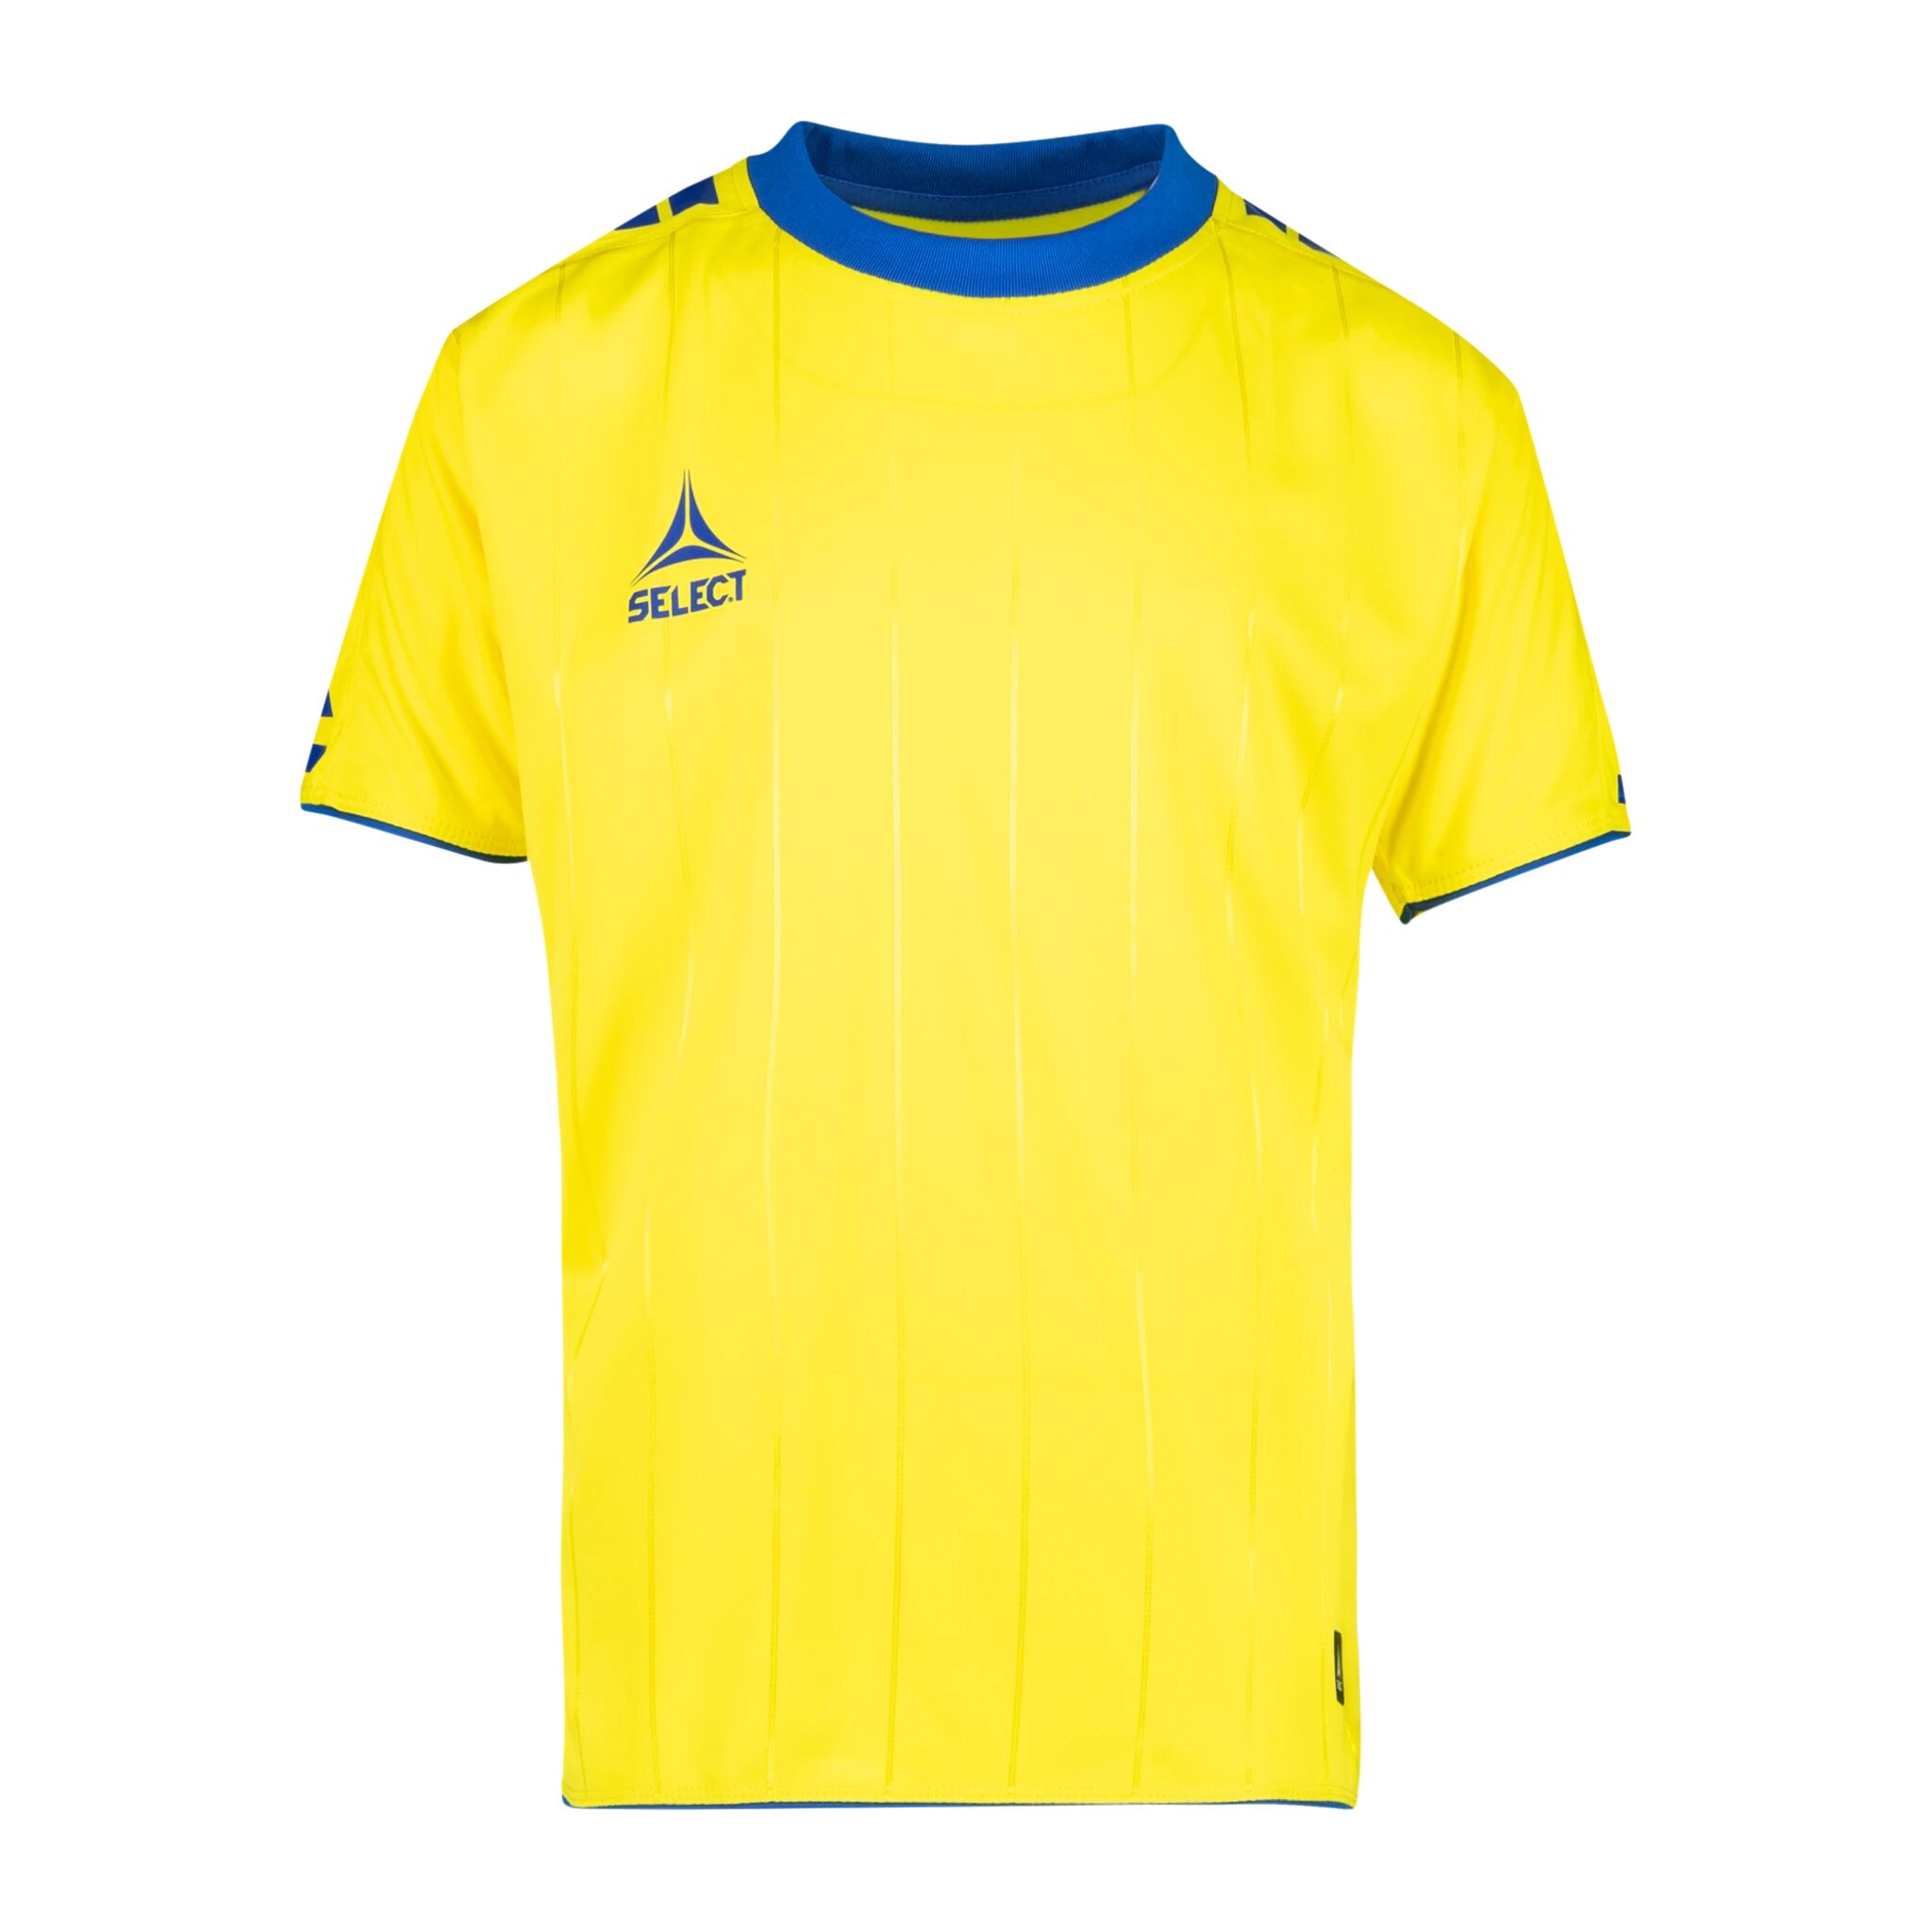 Select Player shirt S/S Argentina, fotballtrøye senior 128 Yellow/Blue